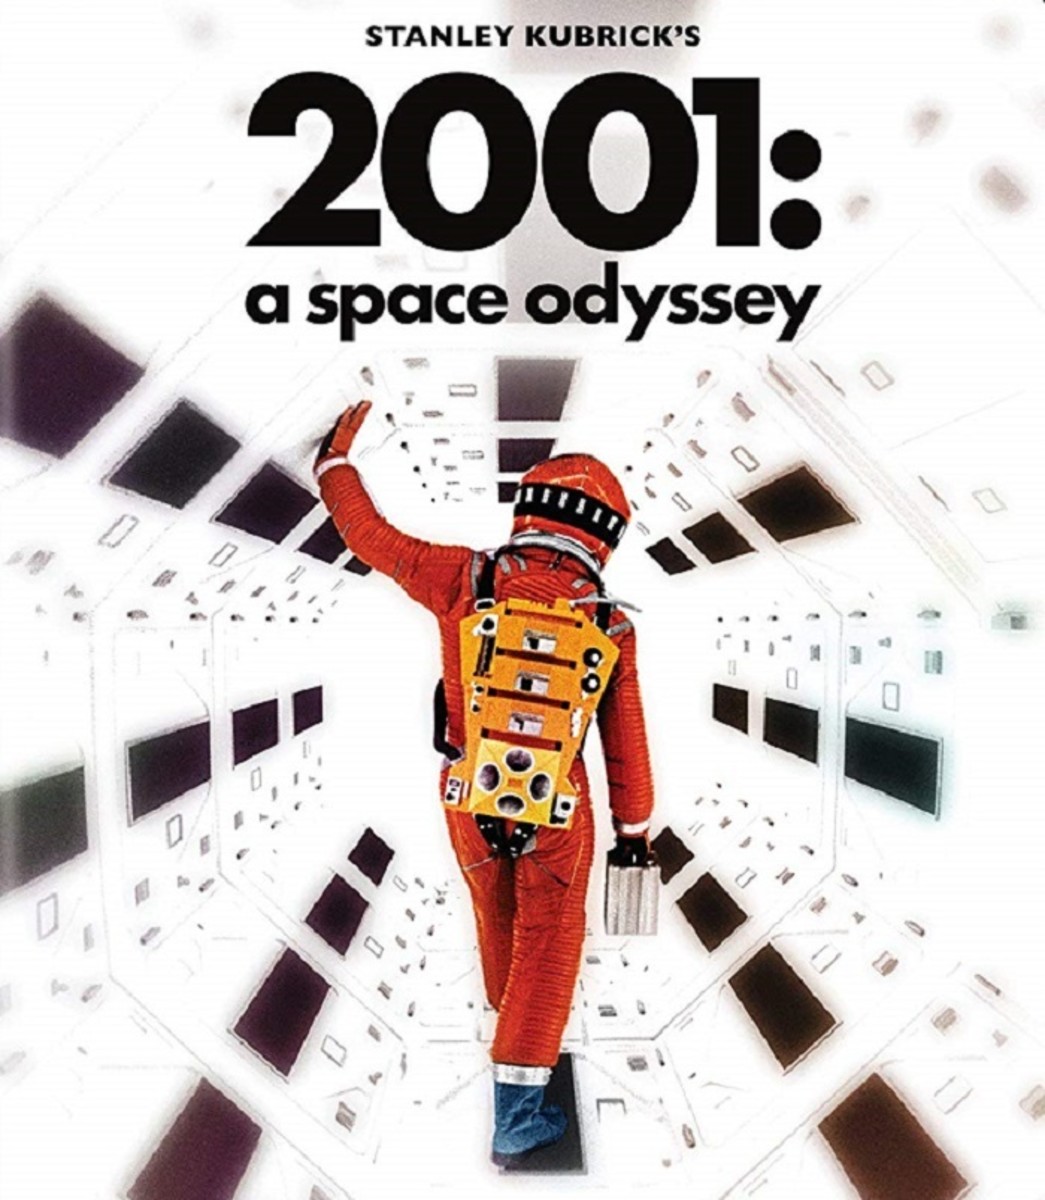 "2001: A Space Odyssey"